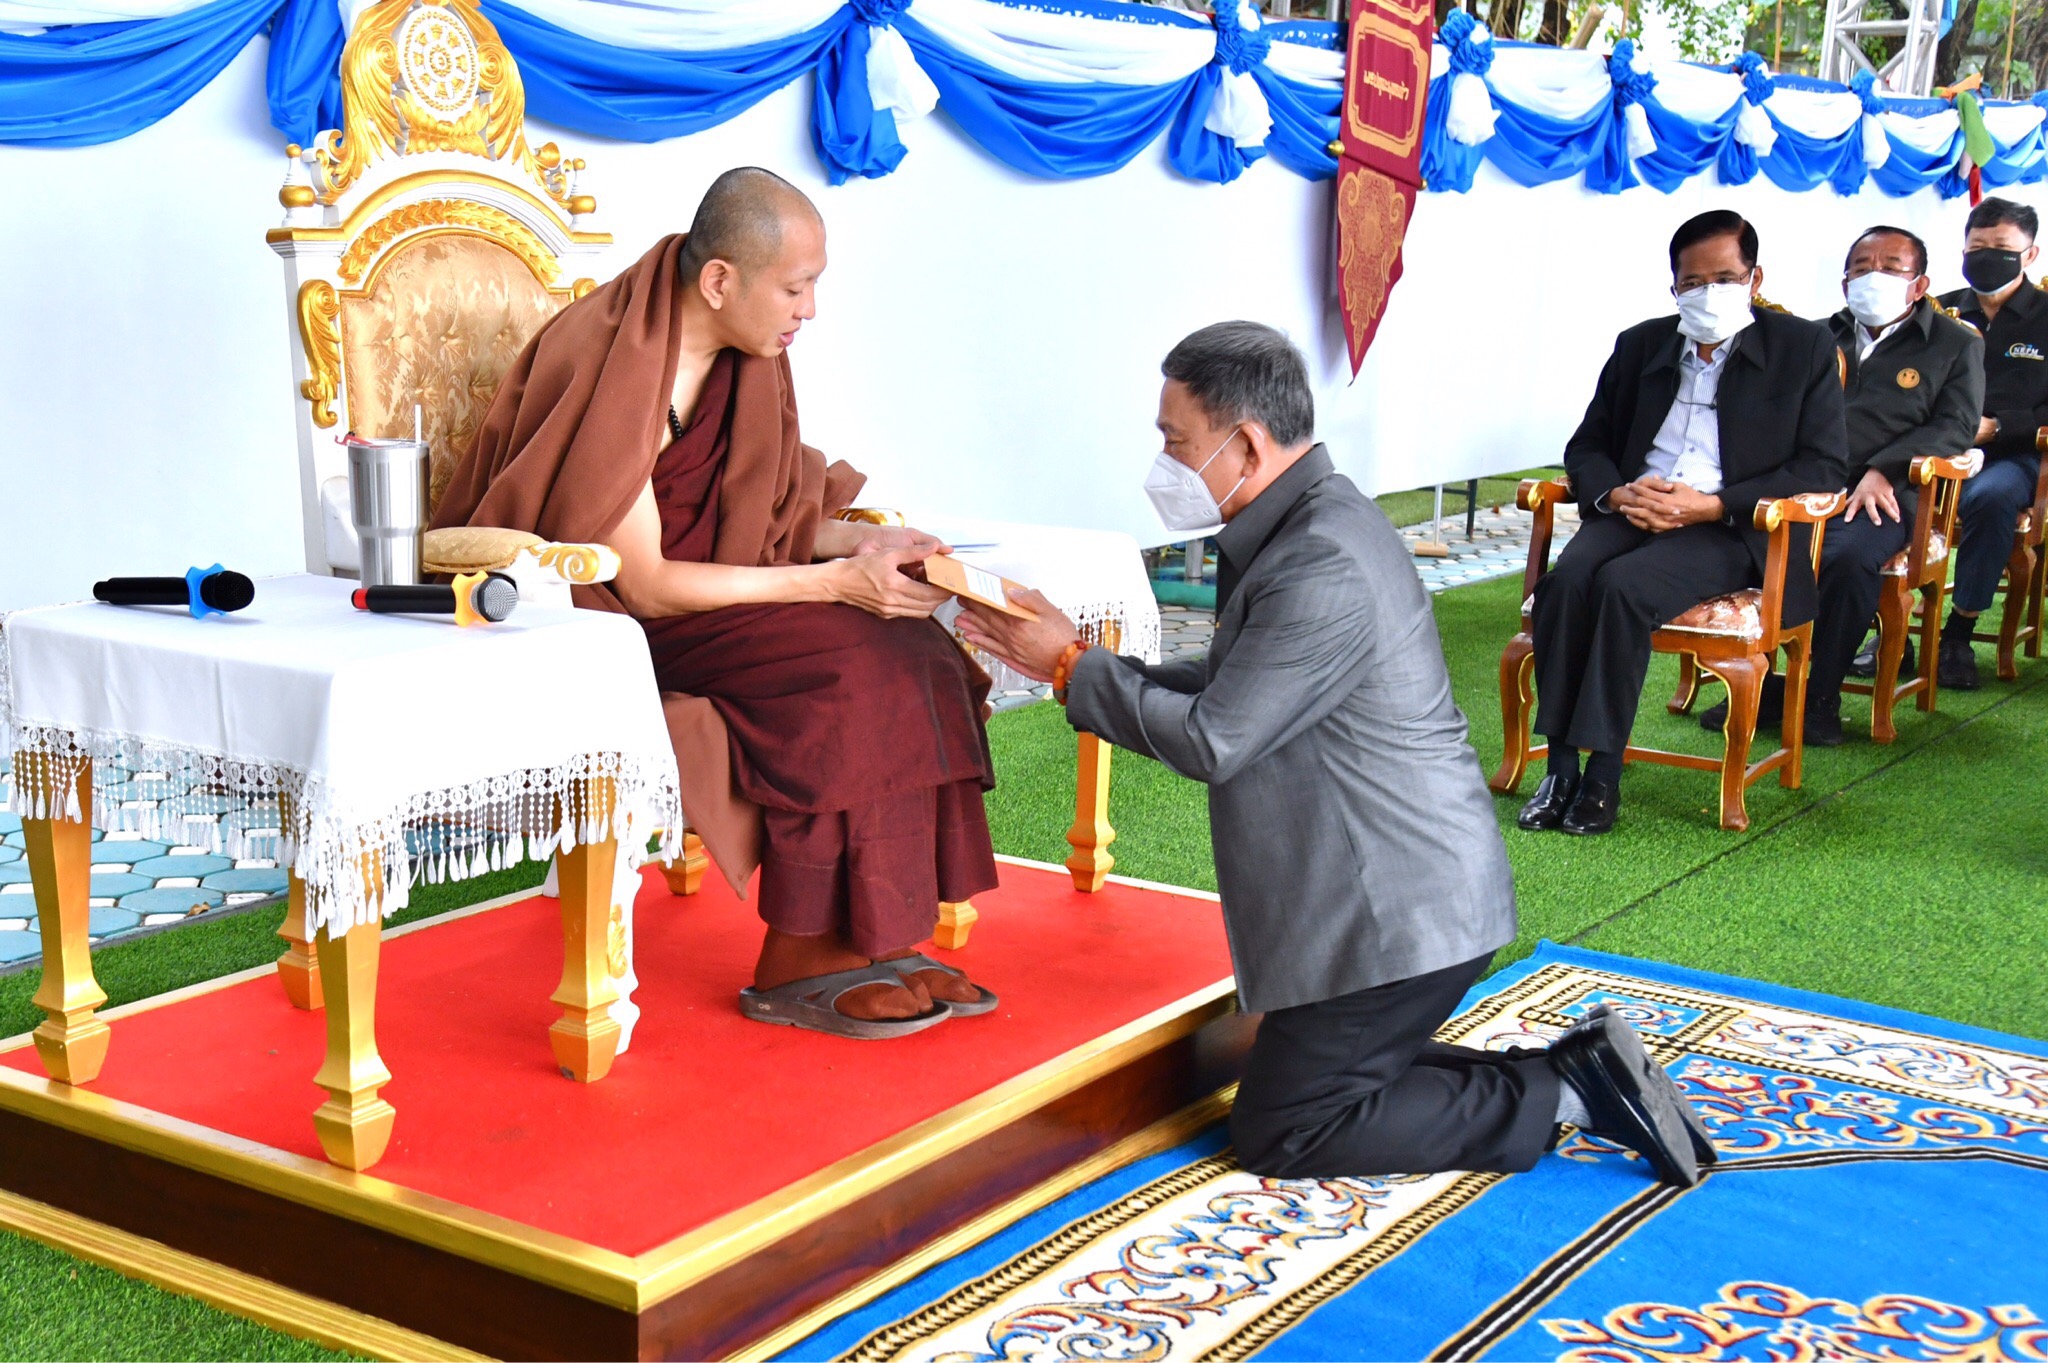 22 January 2022, at Wat Saeng Kaew Phothiyan, Chiang Rai Province